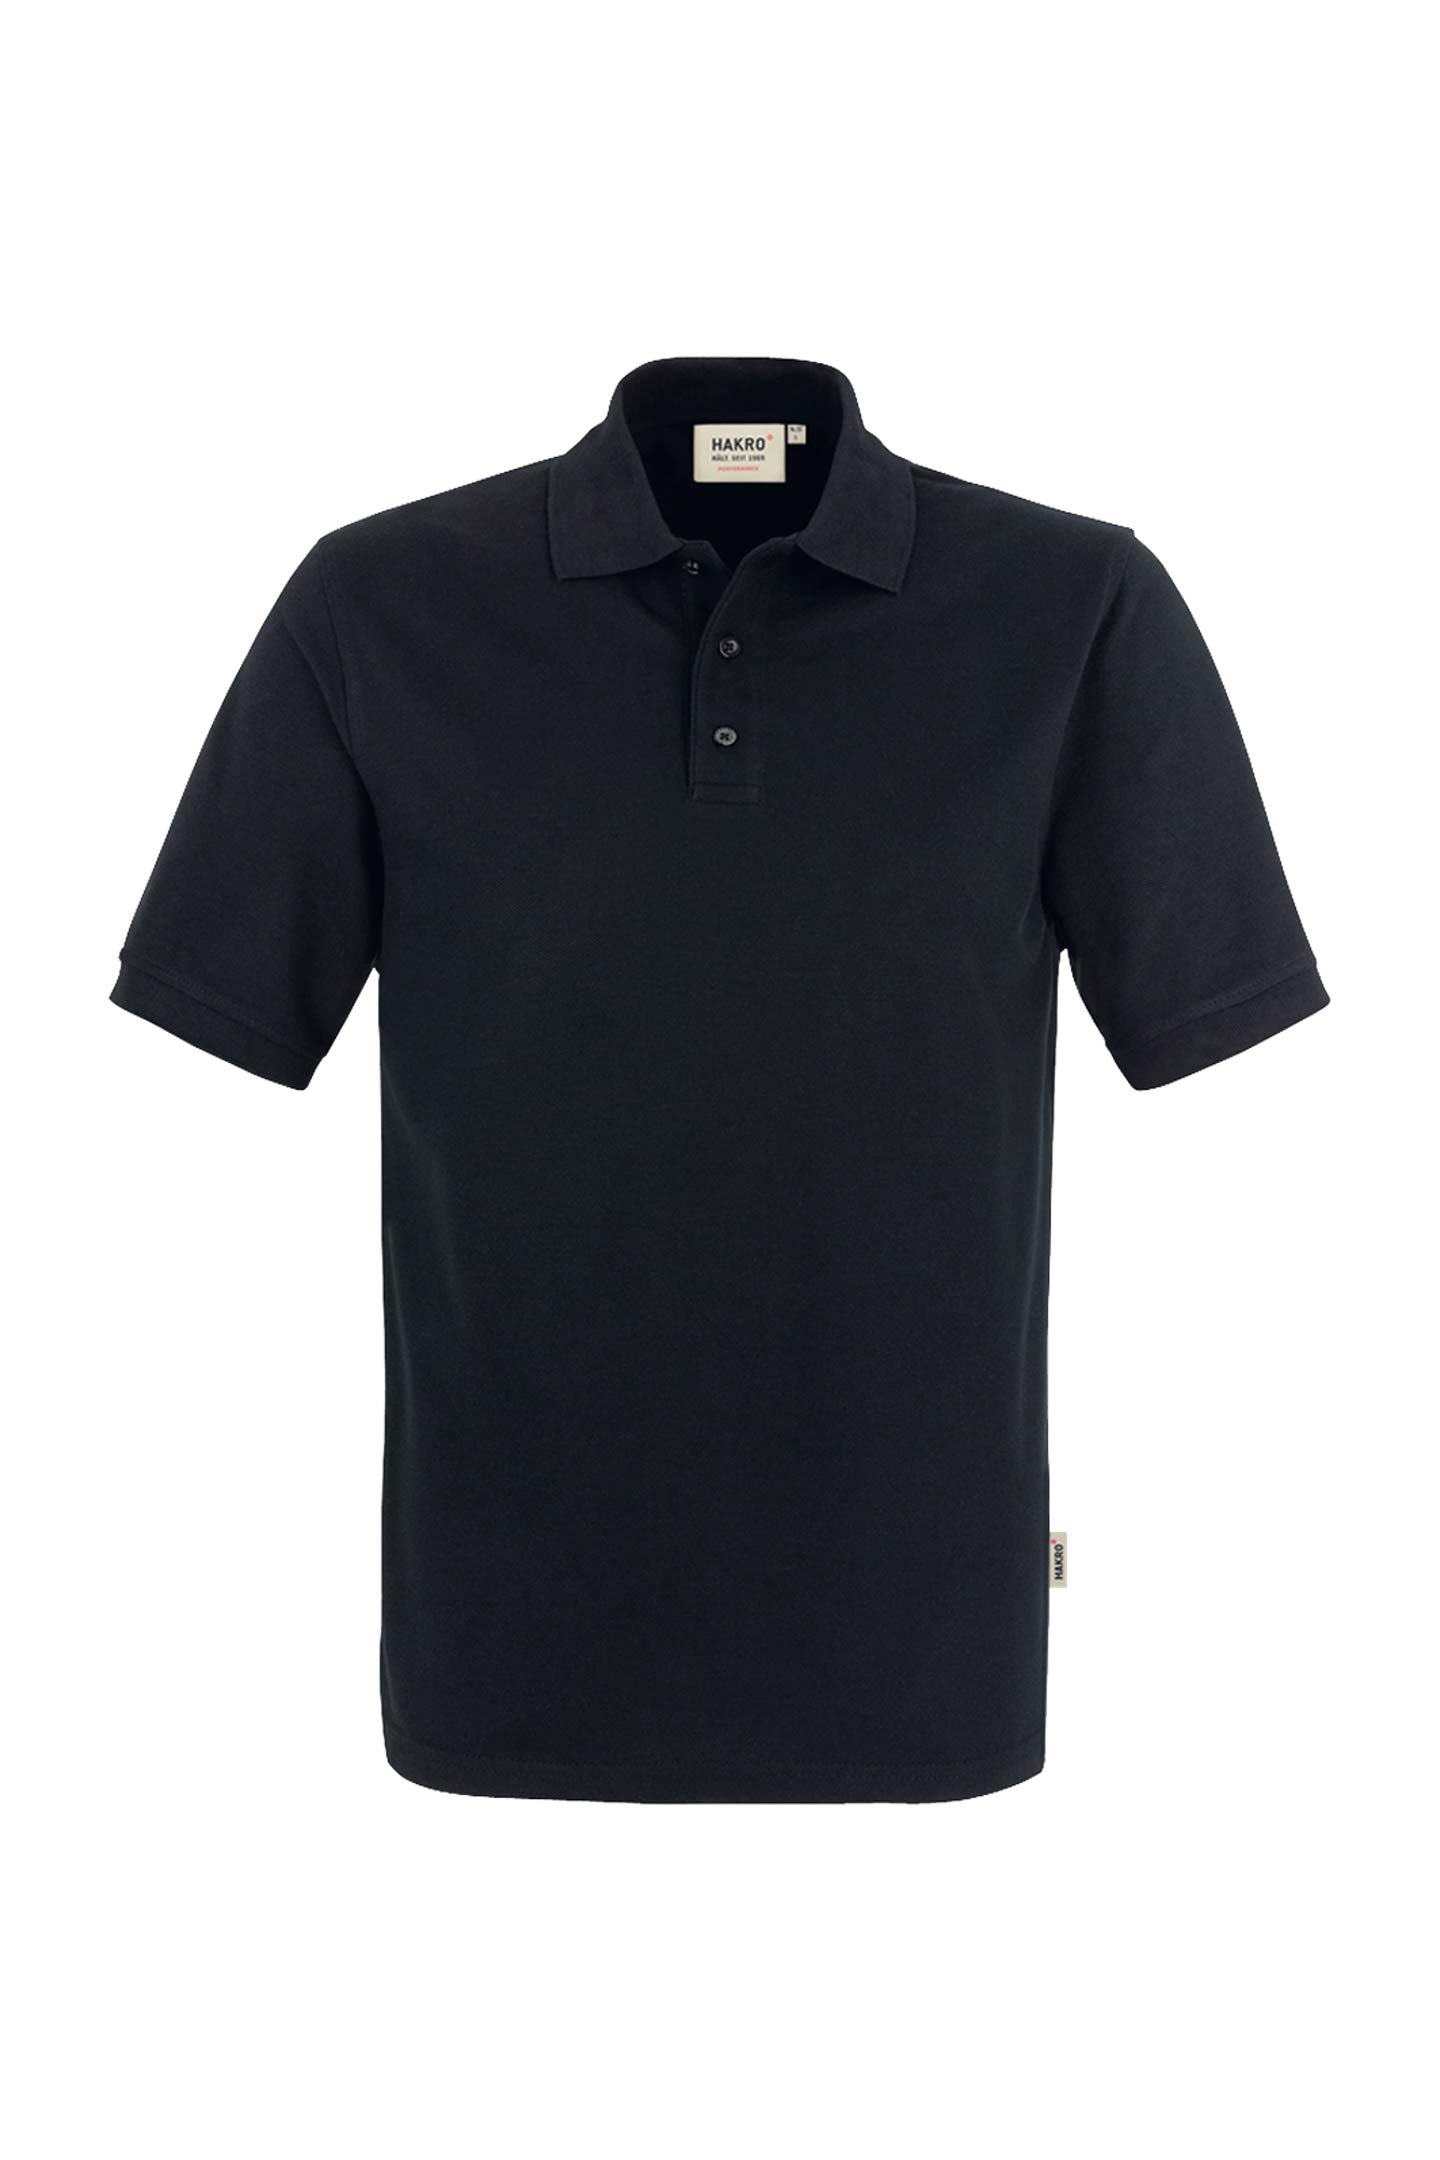 HAKRO Motoo Polo-Shirt schwarz Gr M von HAKRO